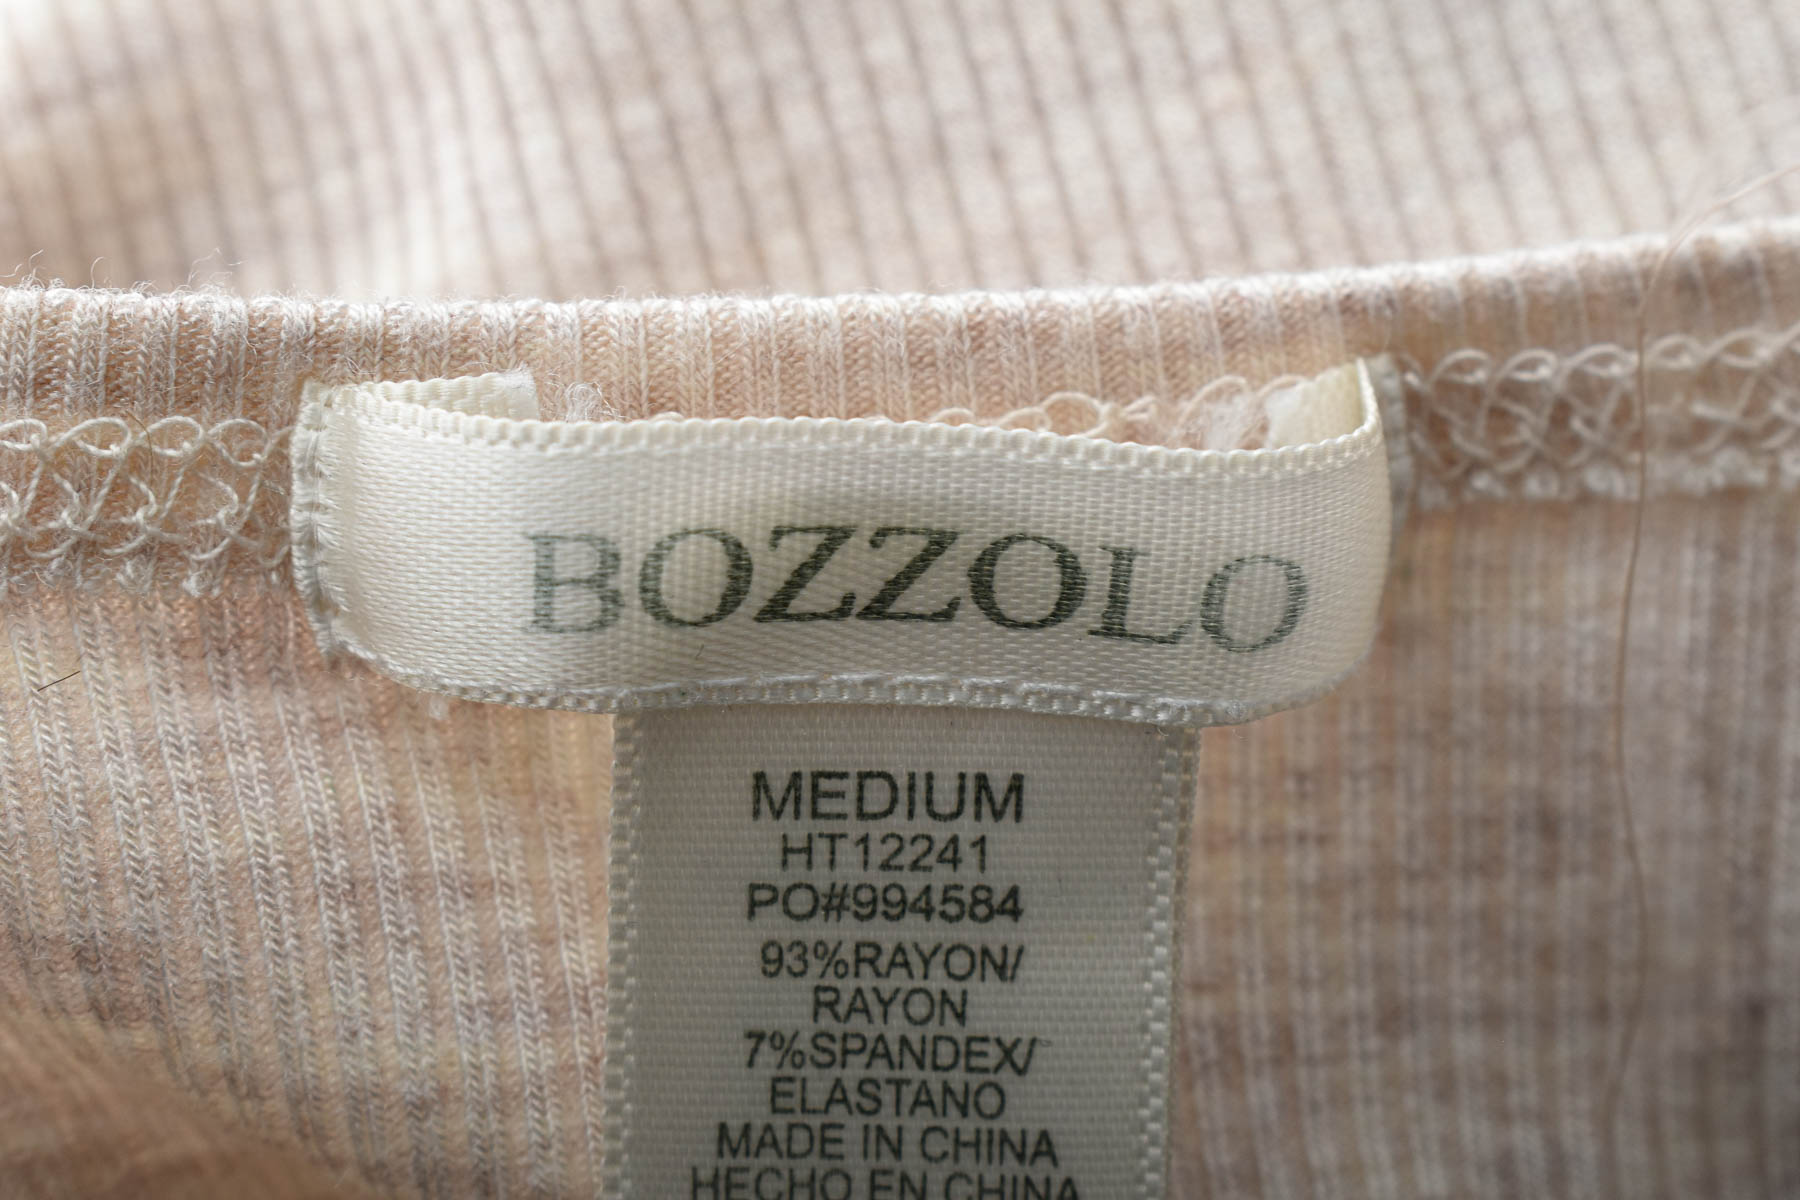 Women's blouse - Bozzolo - 2